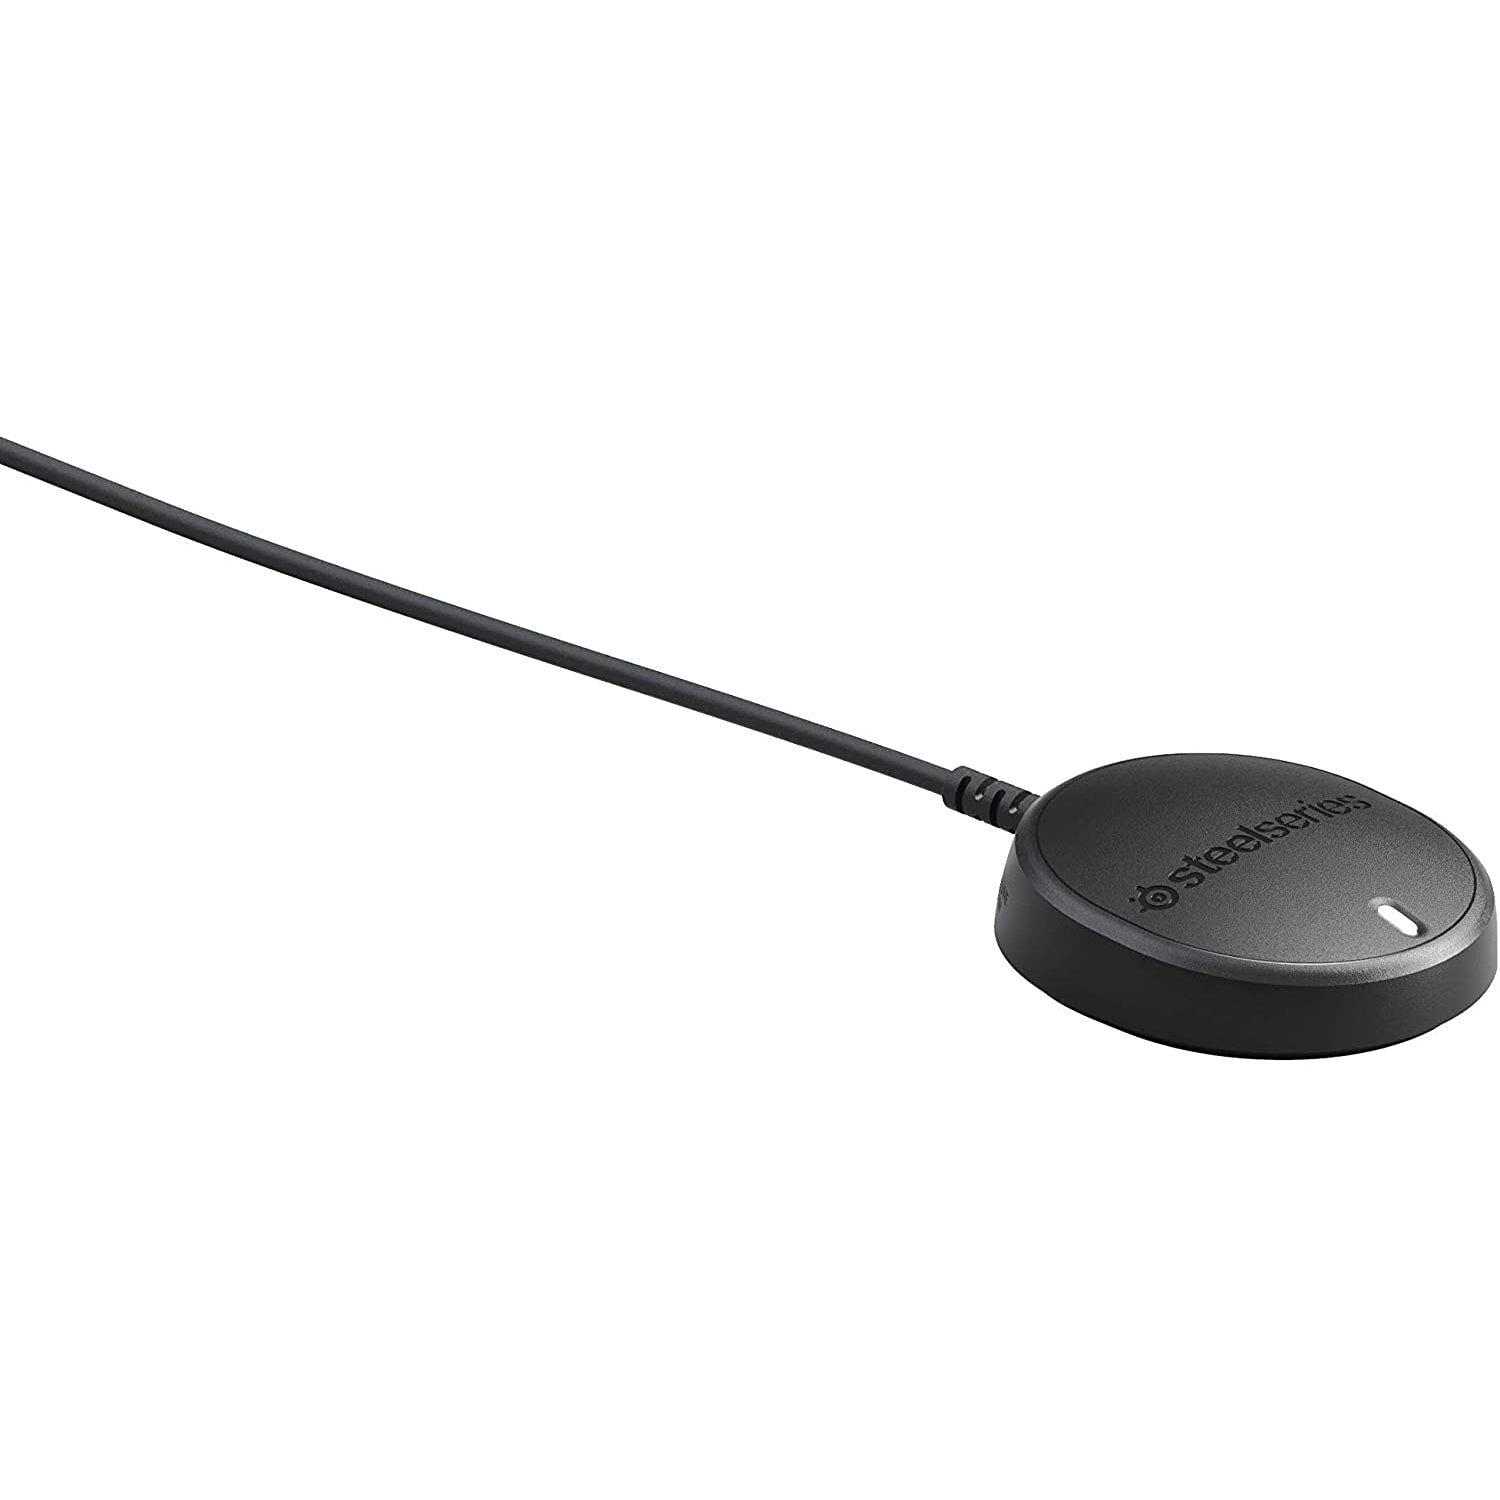 STEELSERIES Arctis 7 Wireless Gaming Headset - Black / White